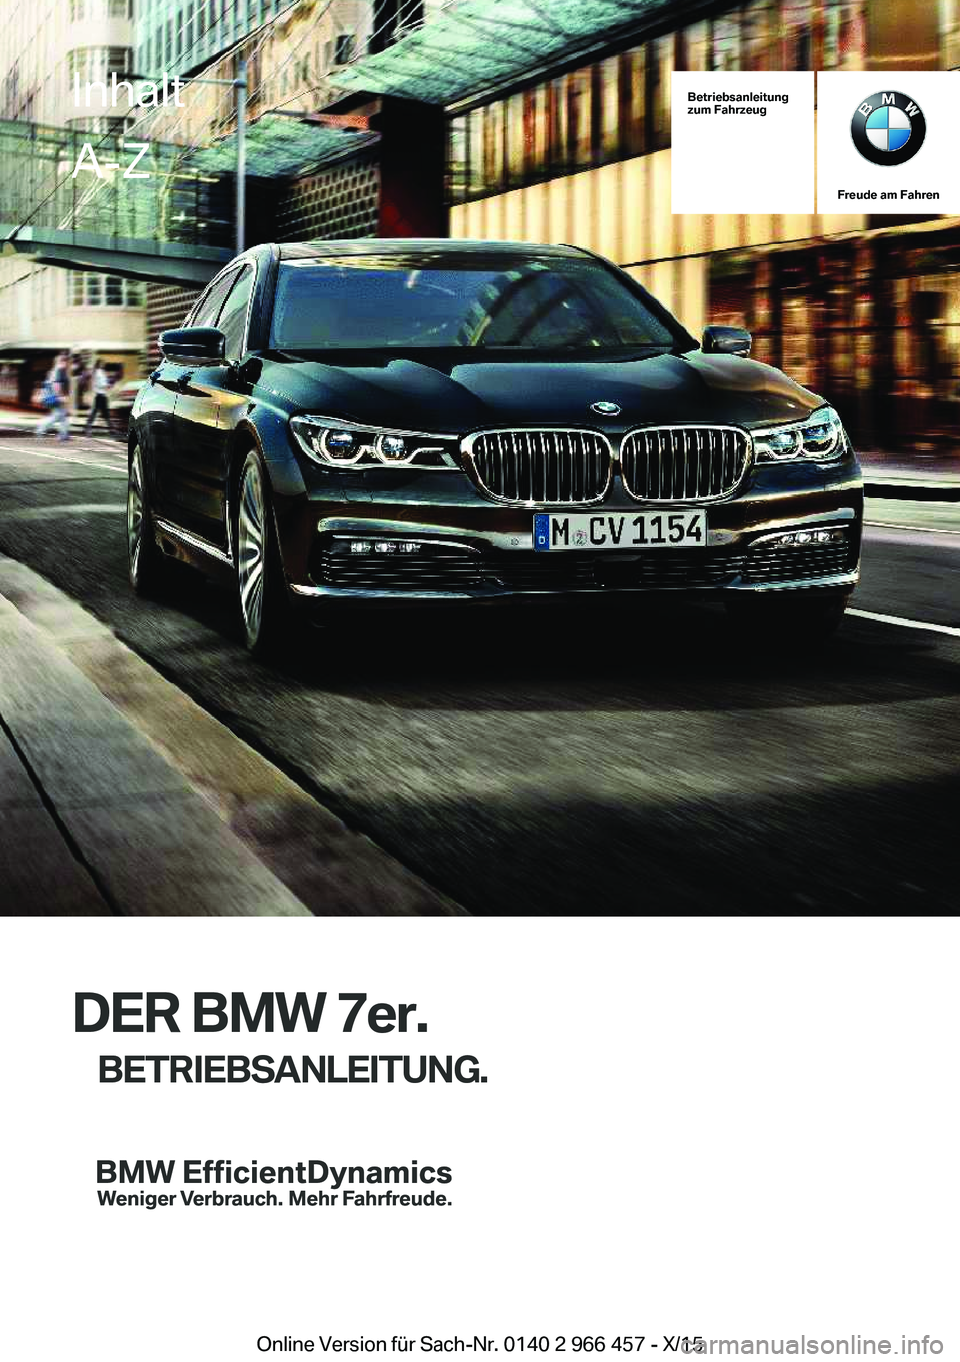 BMW 7 SERIES 2016  Betriebsanleitungen (in German) Betriebsanleitung
zum Fahrzeug
Freude am Fahren
DER BMW 7er.
BETRIEBSANLEITUNG.
InhaltA-Z
Online Version für Sach-Nr. 0140 2 966 457 - X/15   